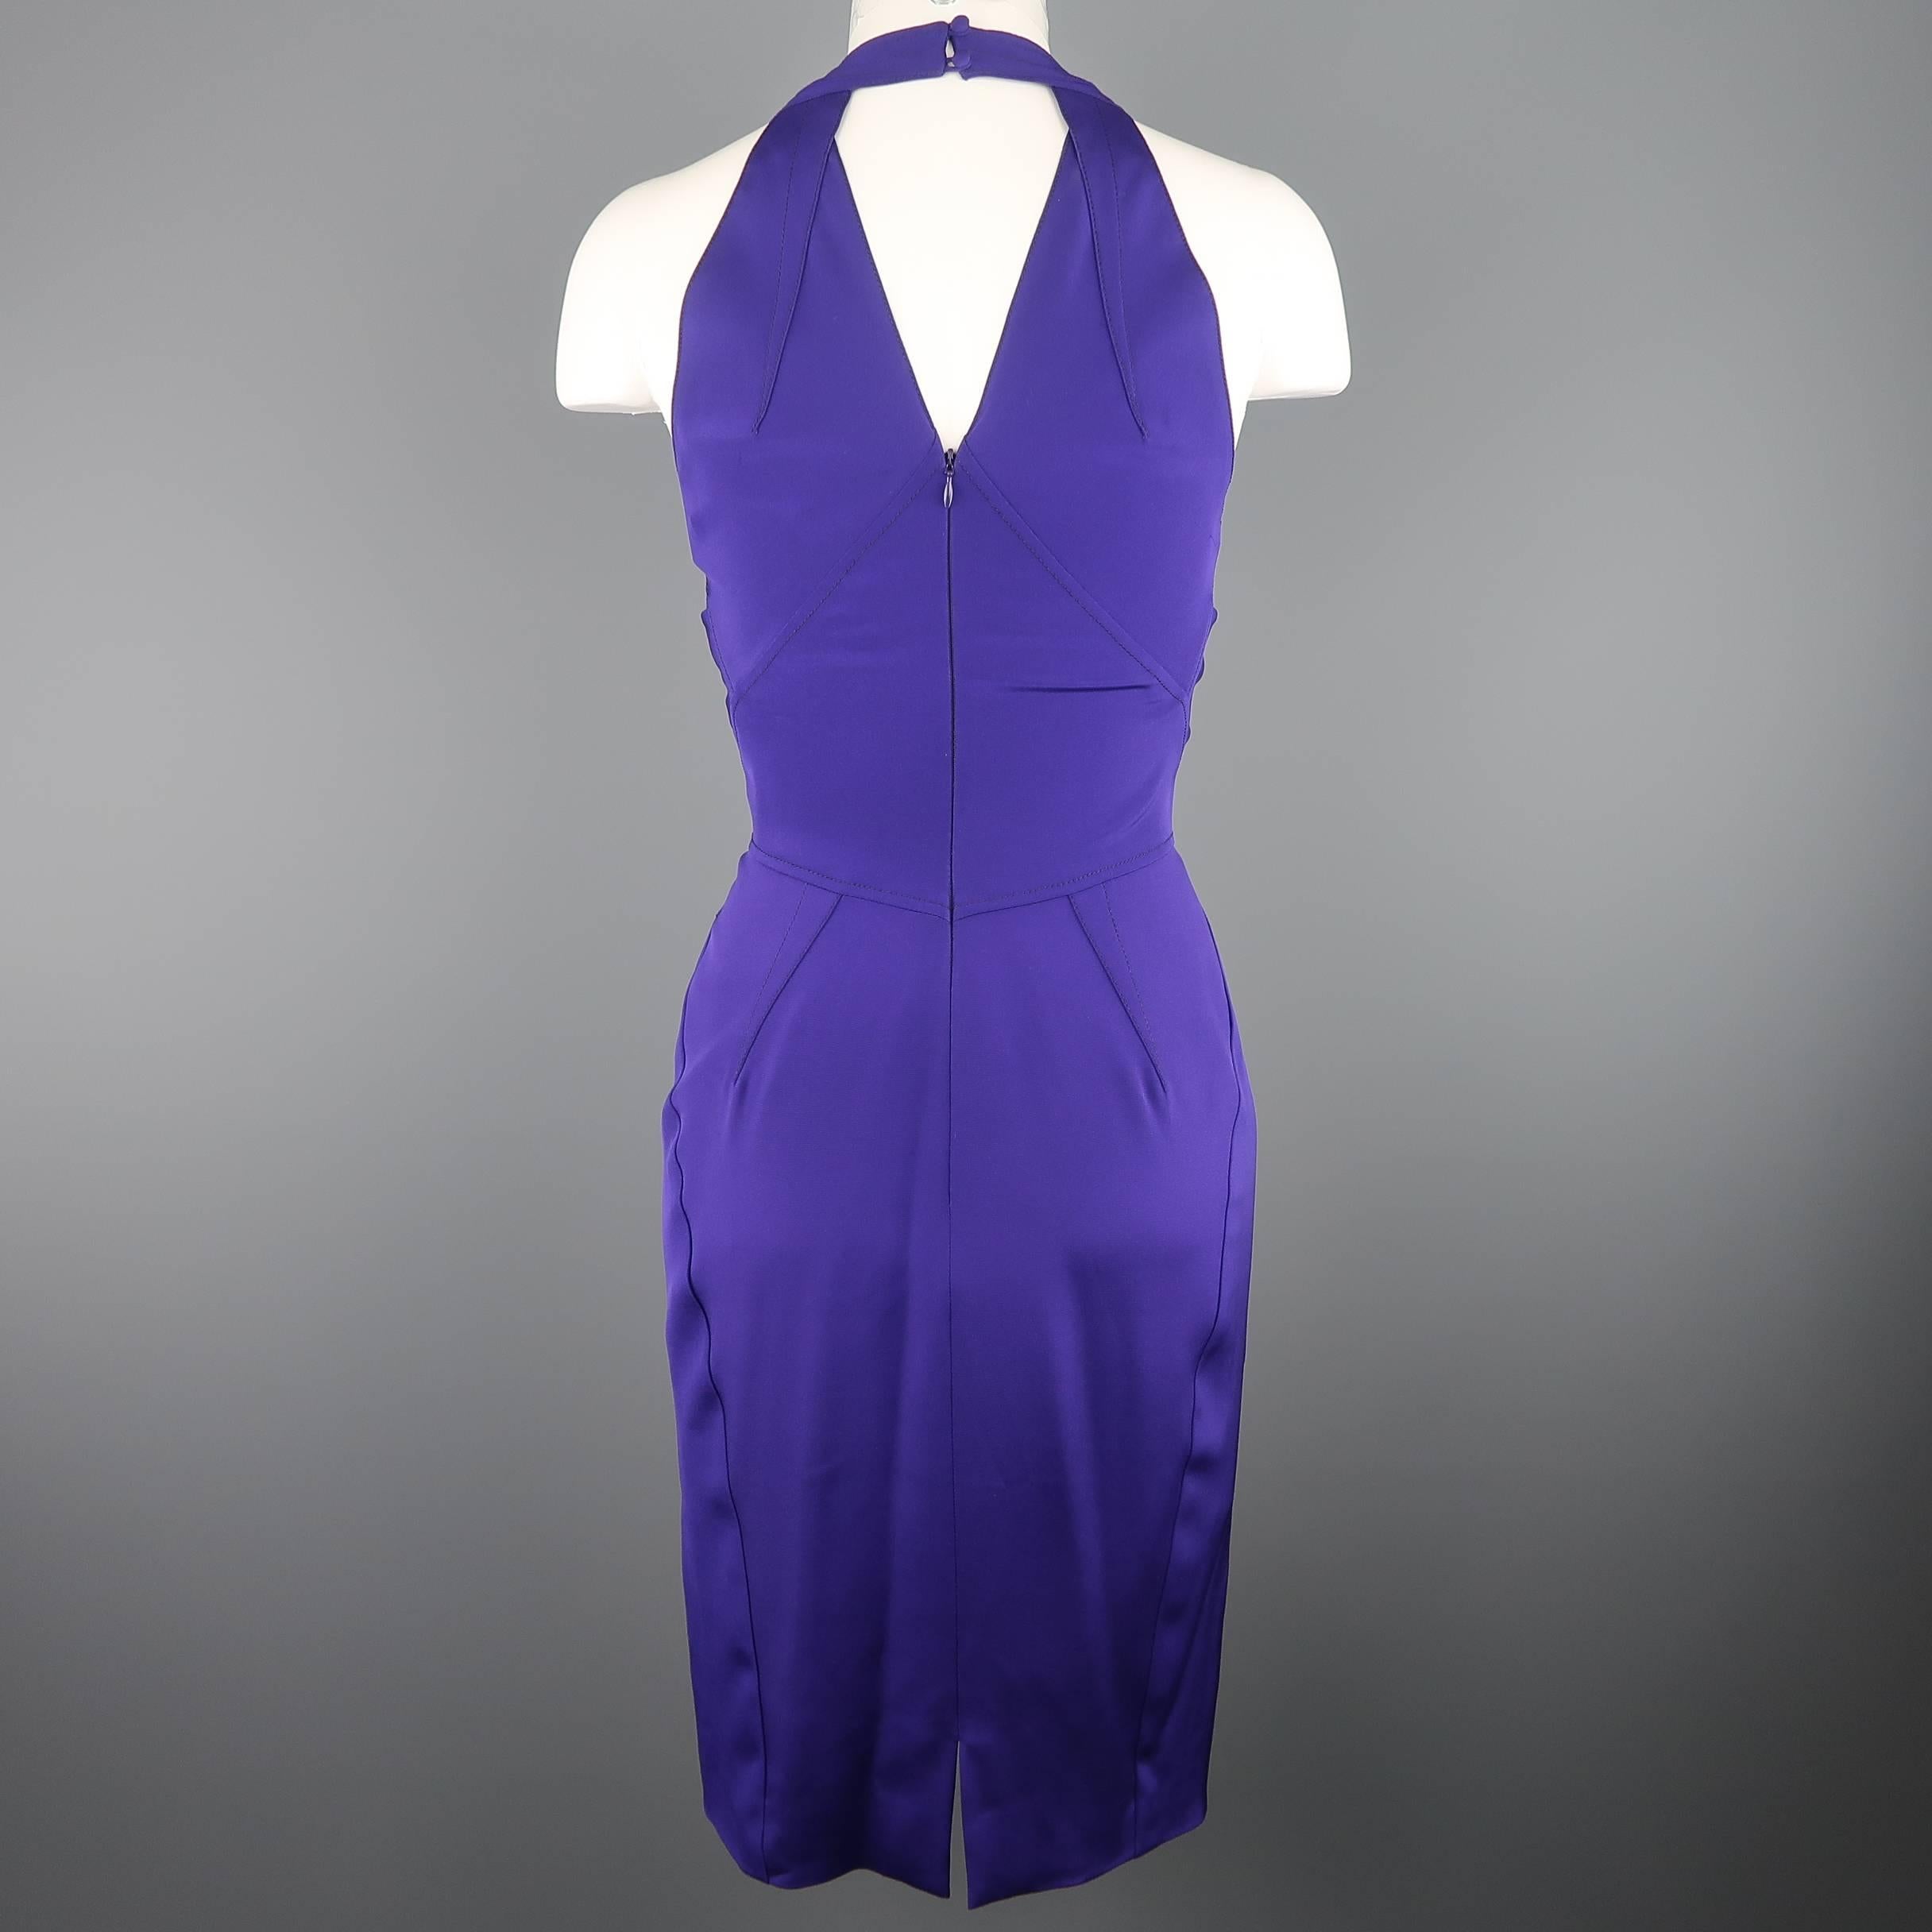 ZAC POSEN Size 2 Purple Stretch Silk Darted Halter Top Cocktail Dress 1